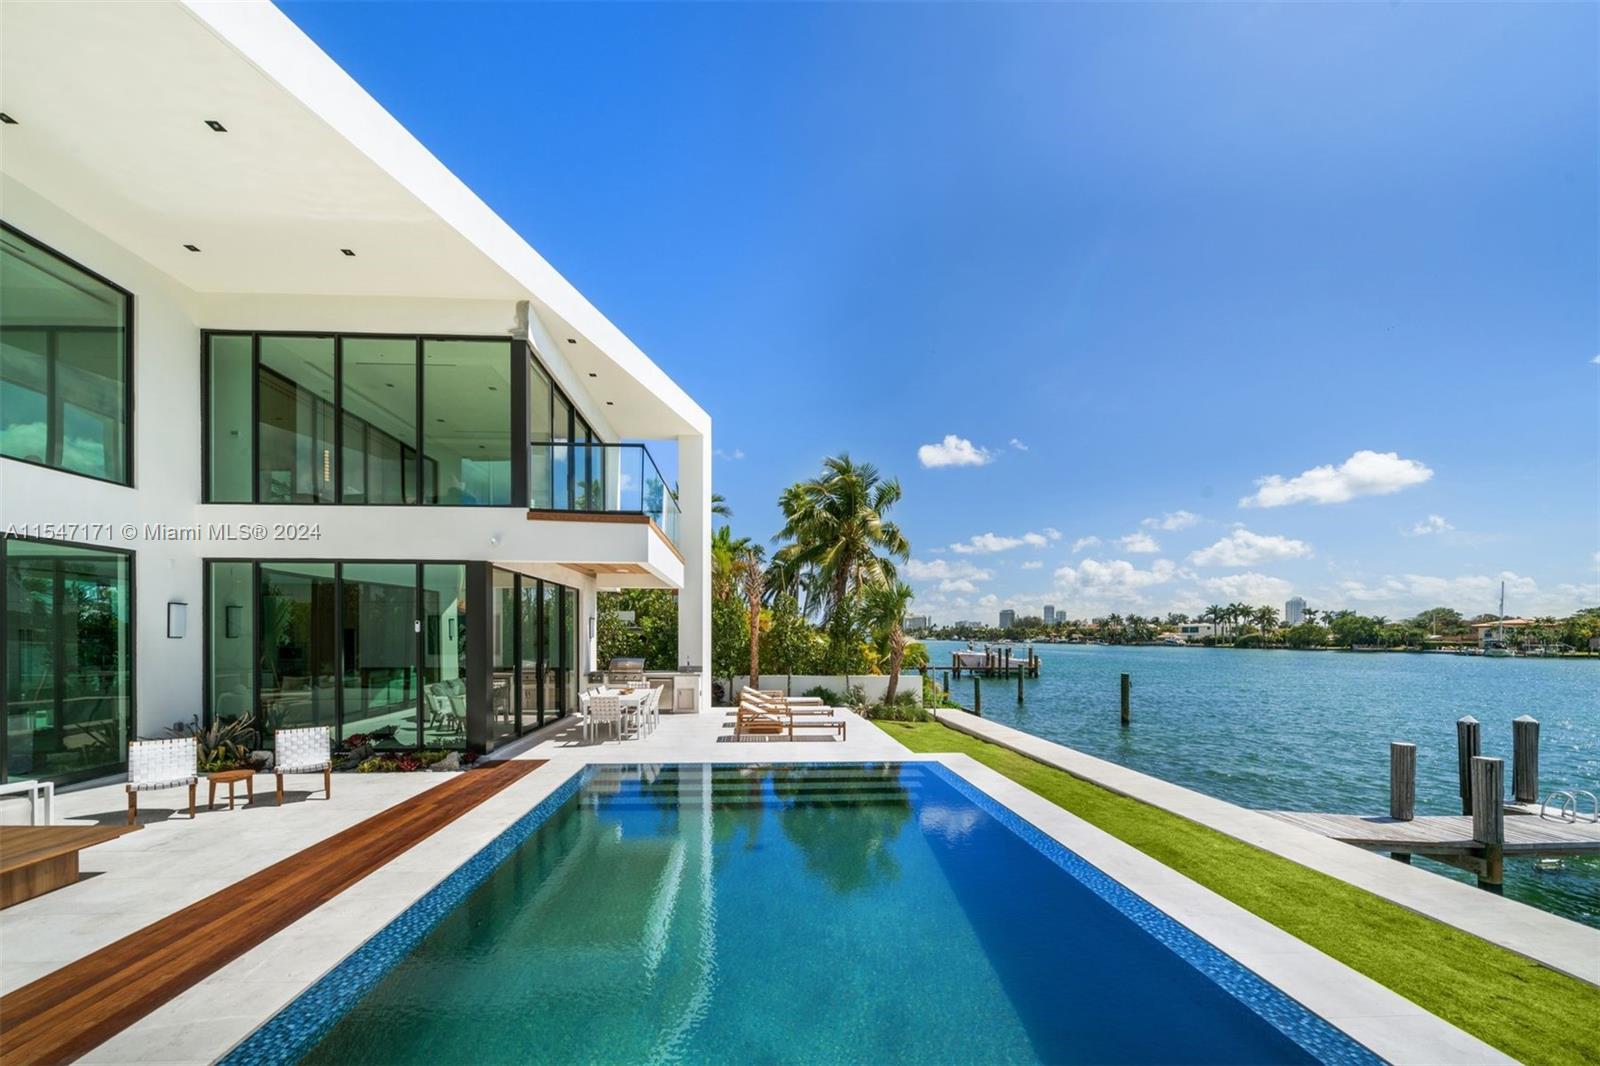 Property for Sale at 1800 Daytonia Rd, Miami Beach, Miami-Dade County, Florida - Bedrooms: 7 
Bathrooms: 8  - $14,250,000